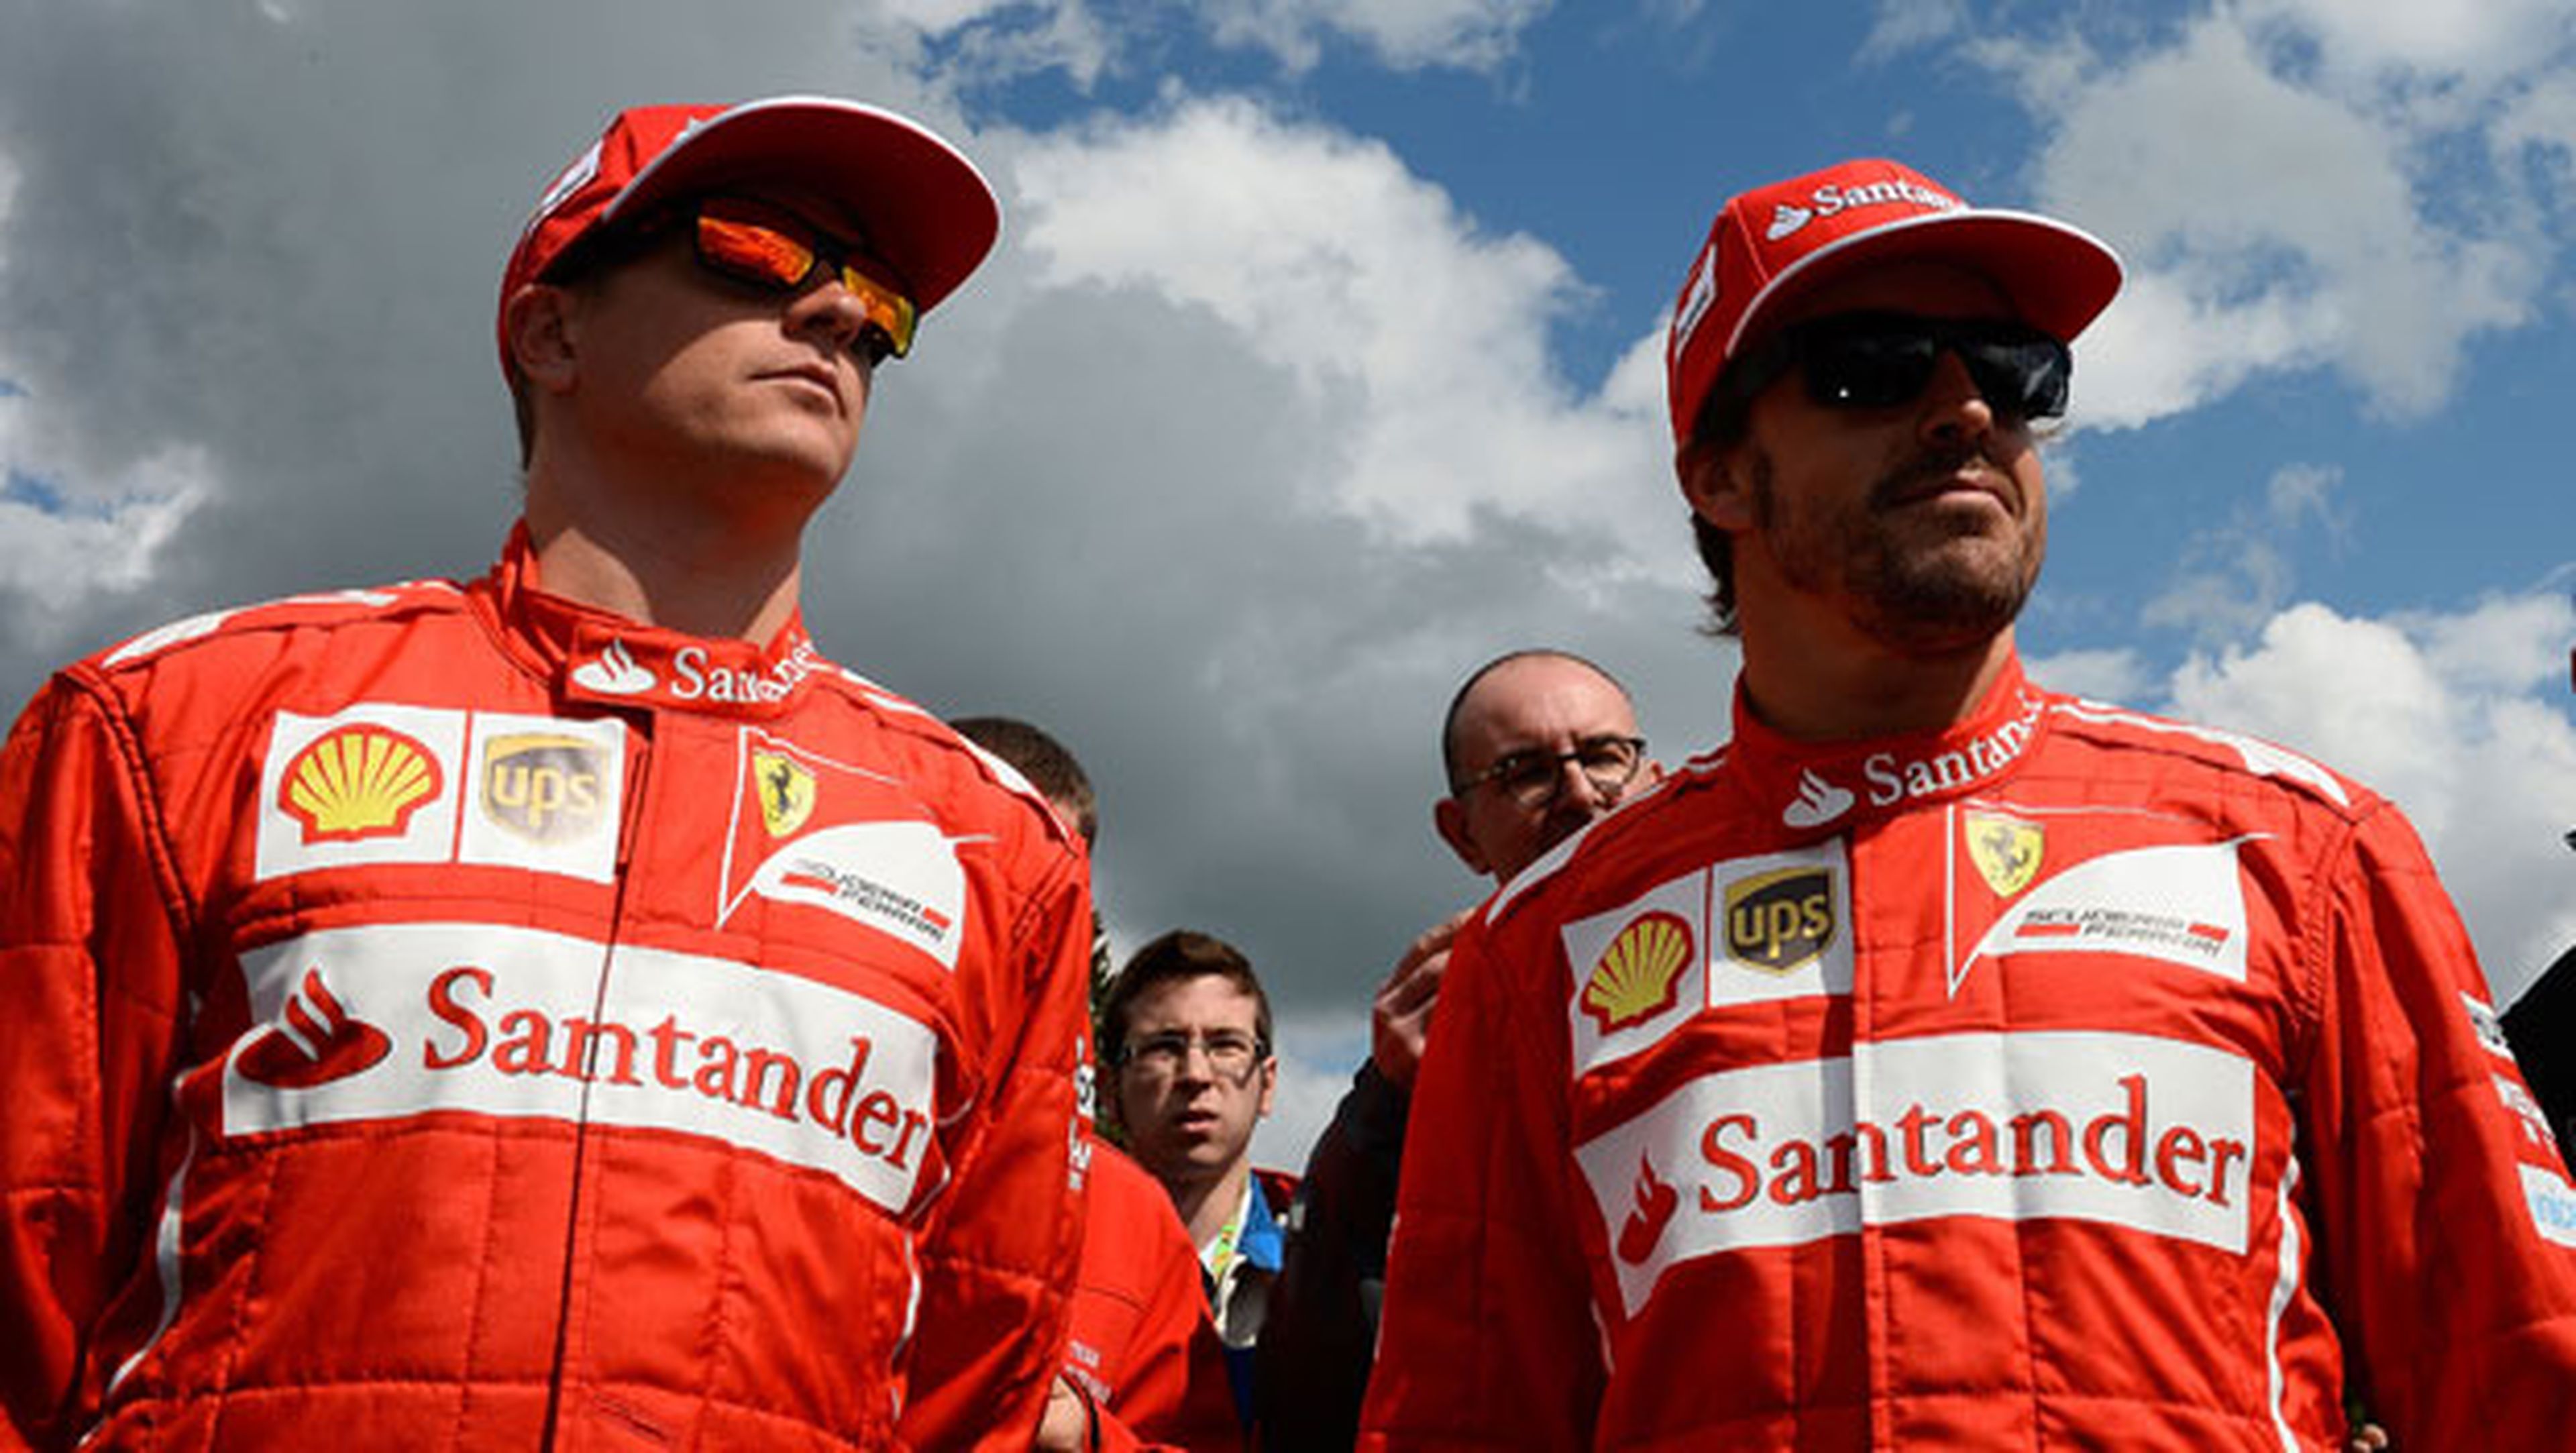 Mattiacci: "Alonso y Räikkönen, juntos en Ferrari en 2015"